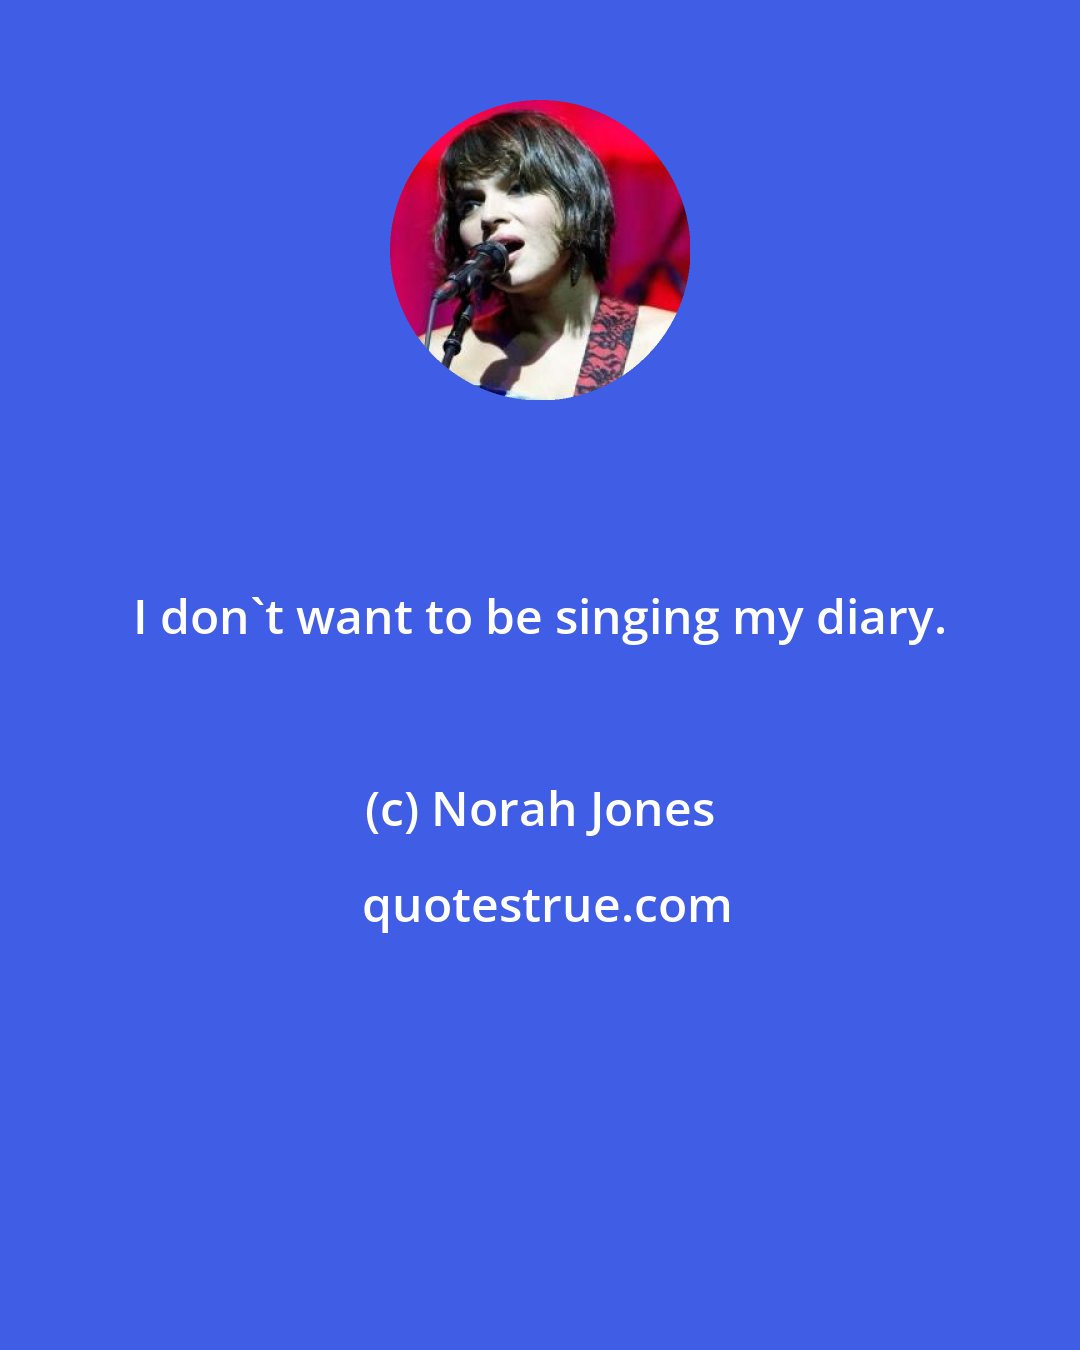 Norah Jones: I don't want to be singing my diary.